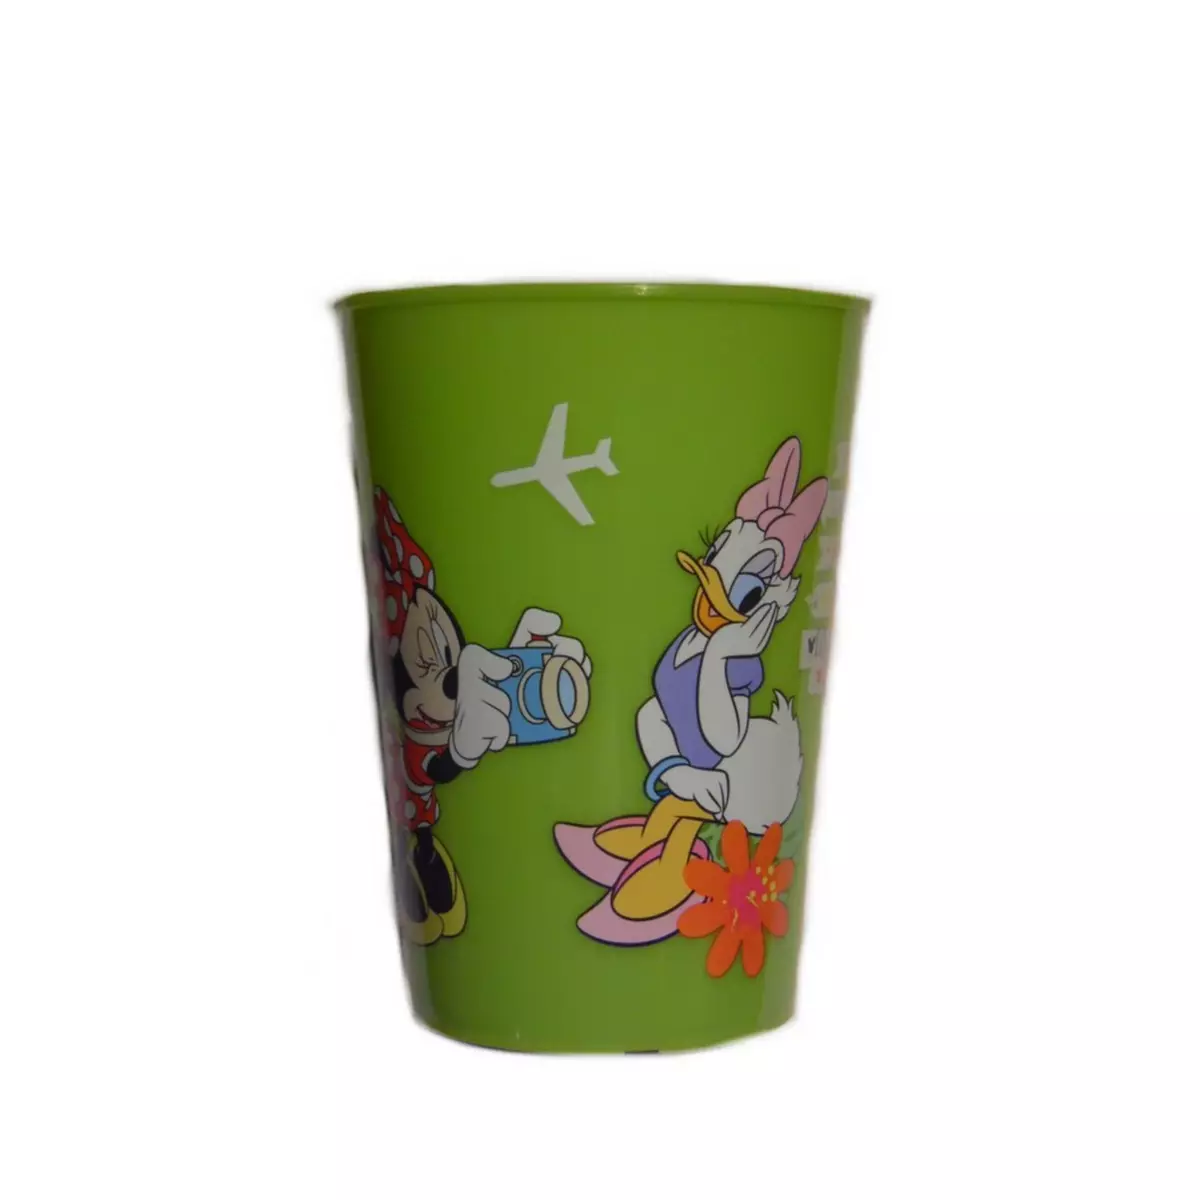 DISNEY Gobelet Minnie Disney verre plastique enfant vert